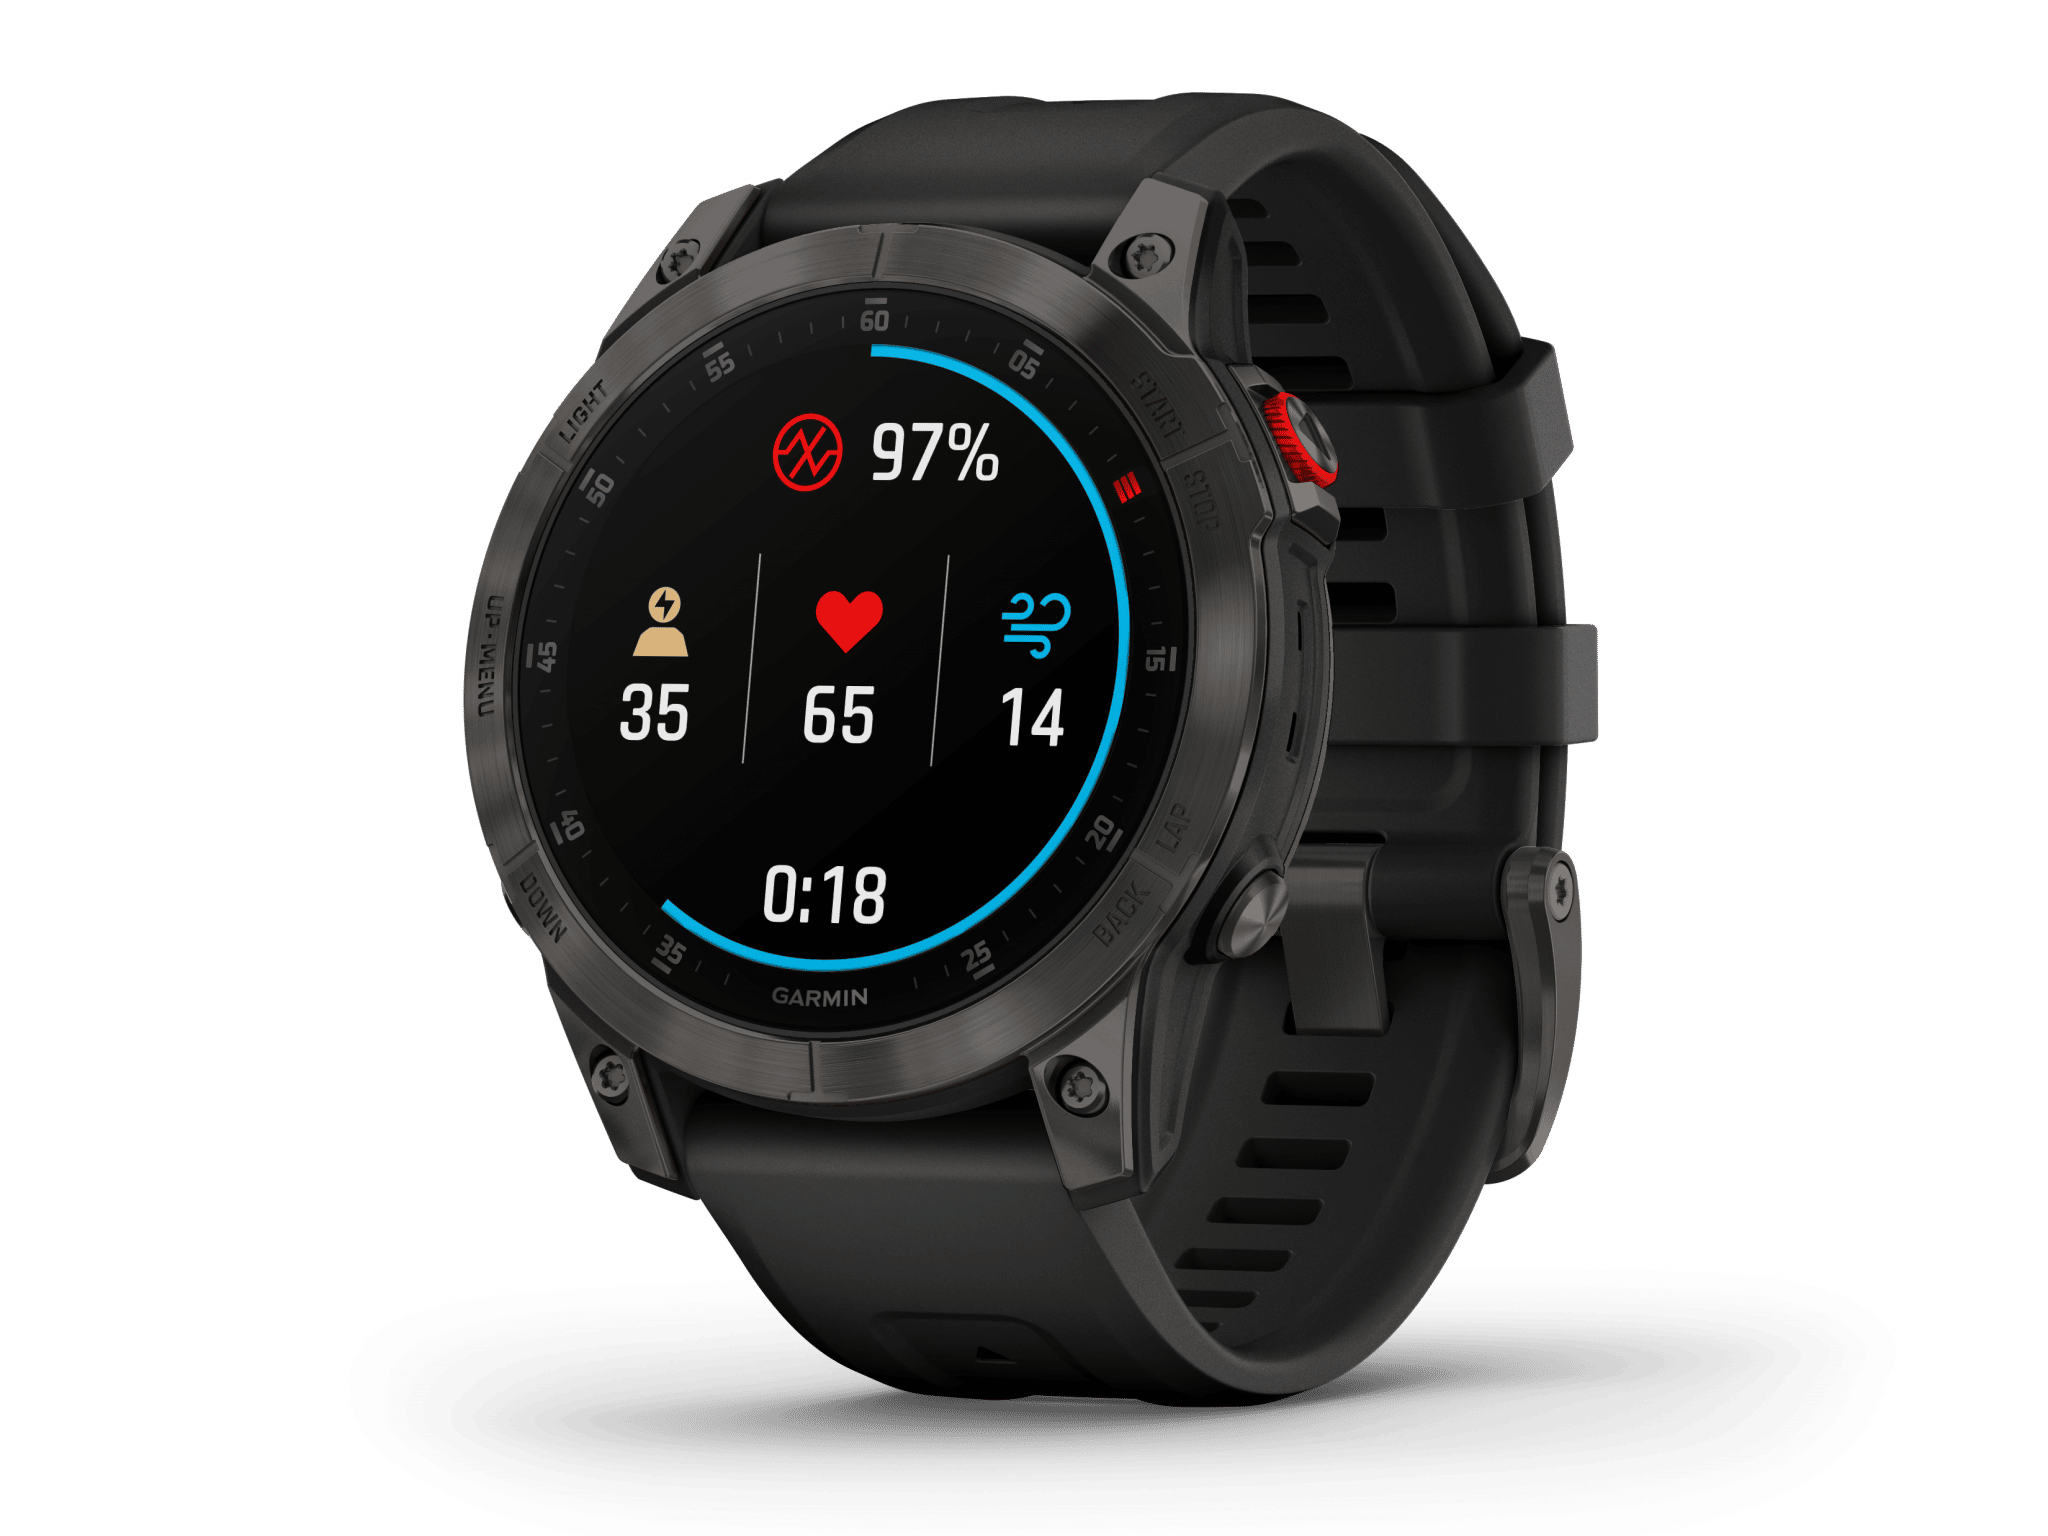 Garmin epix 2 test & experiences – ultra-sharp sports smartwatch for outdoor fans?